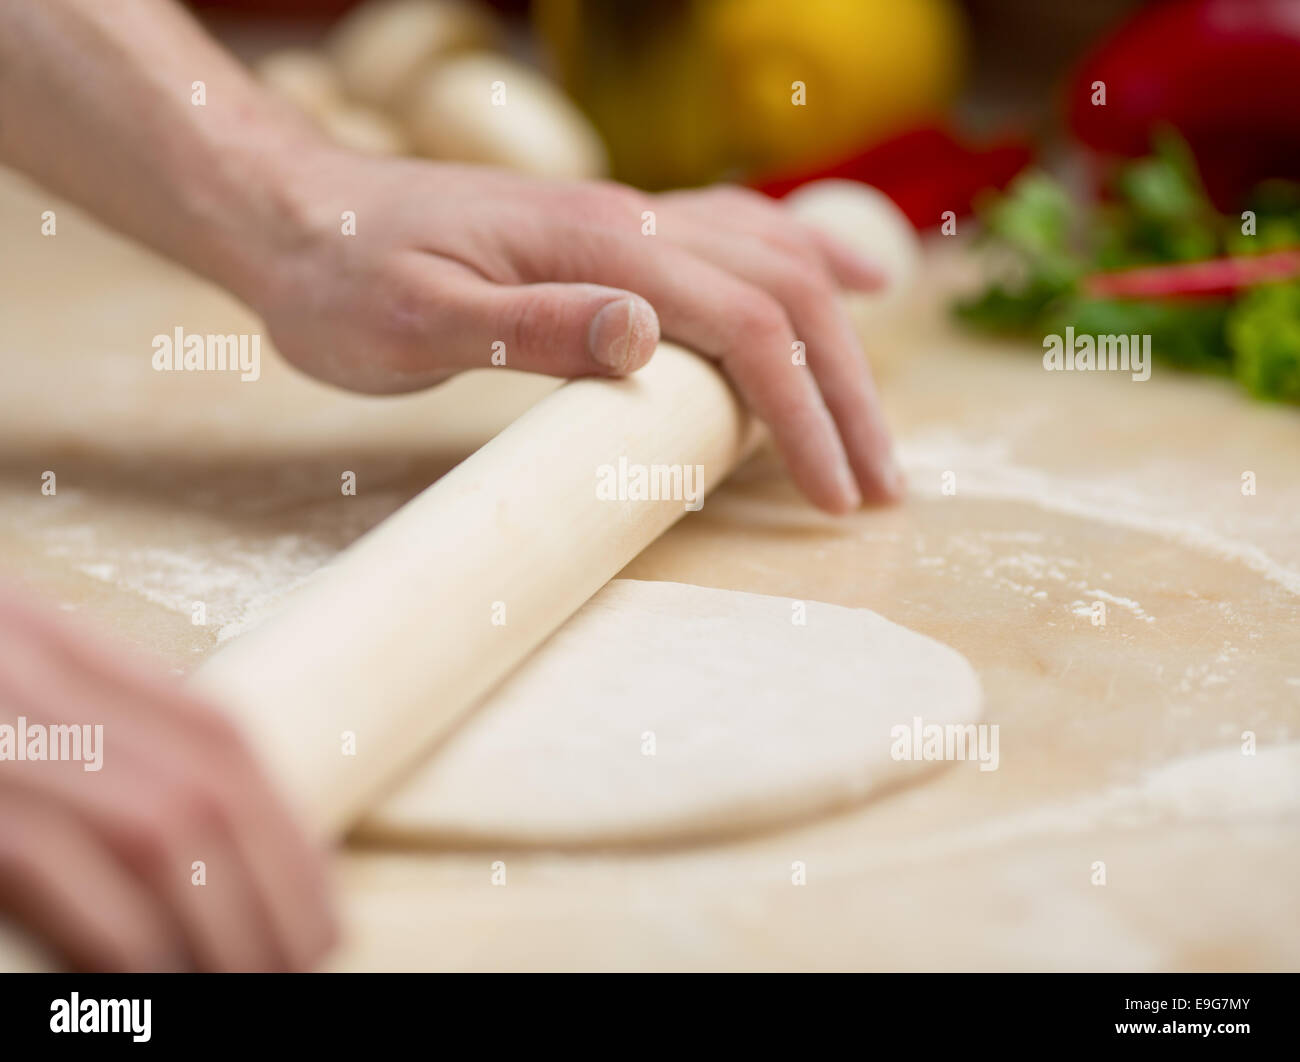 Man kneading dough for pizza Stock Photo